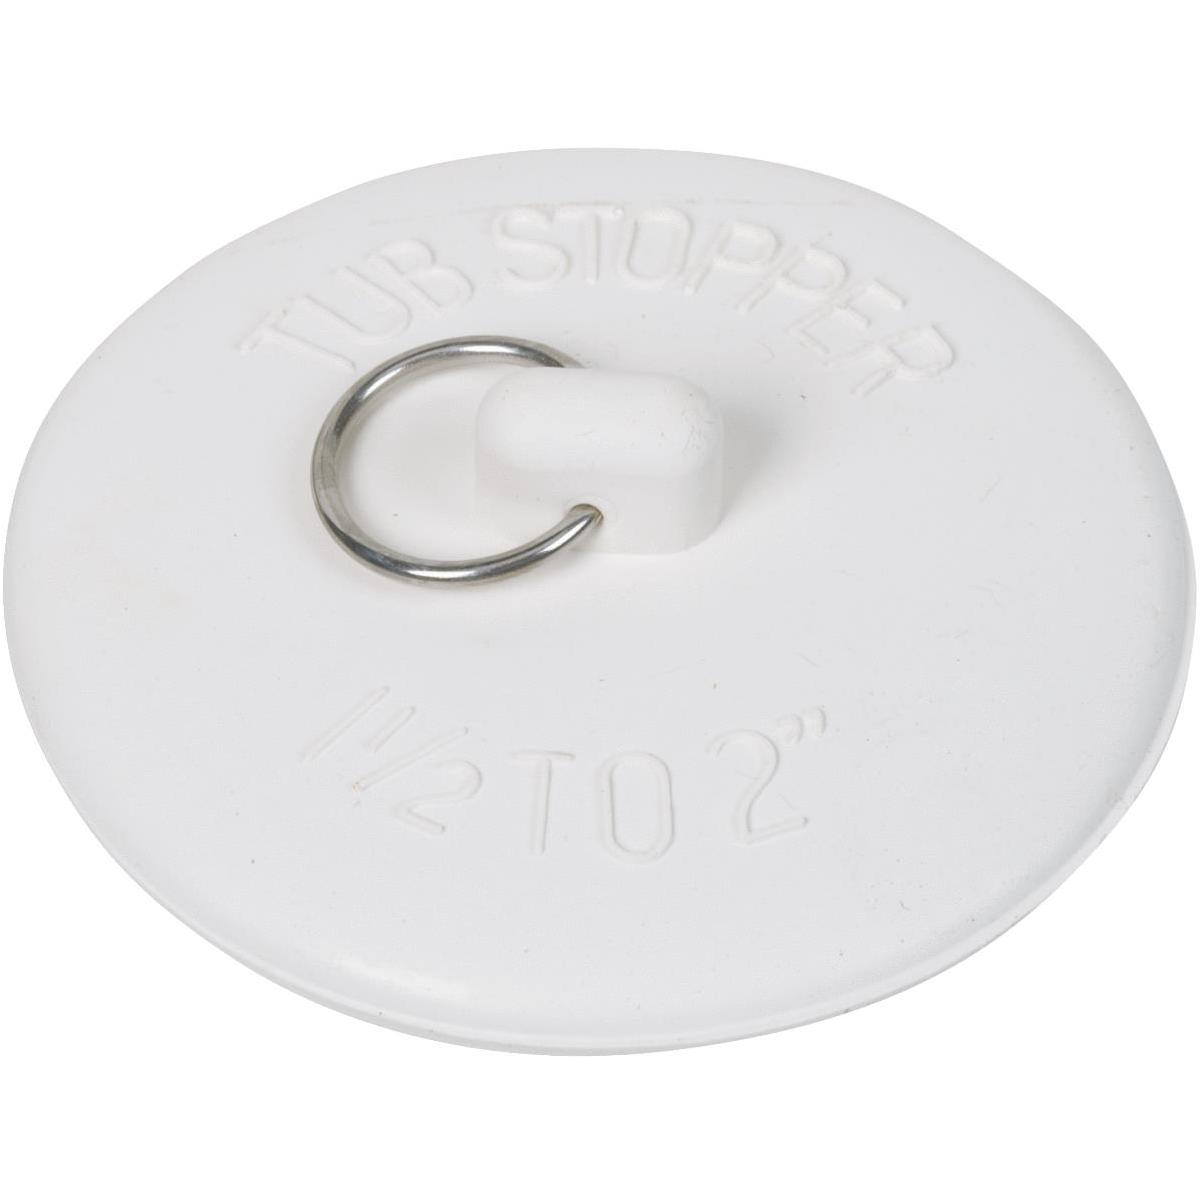 Mesh Bathtub Strainer with Chrome Ring for Bathtub Drain, Stainless Steel